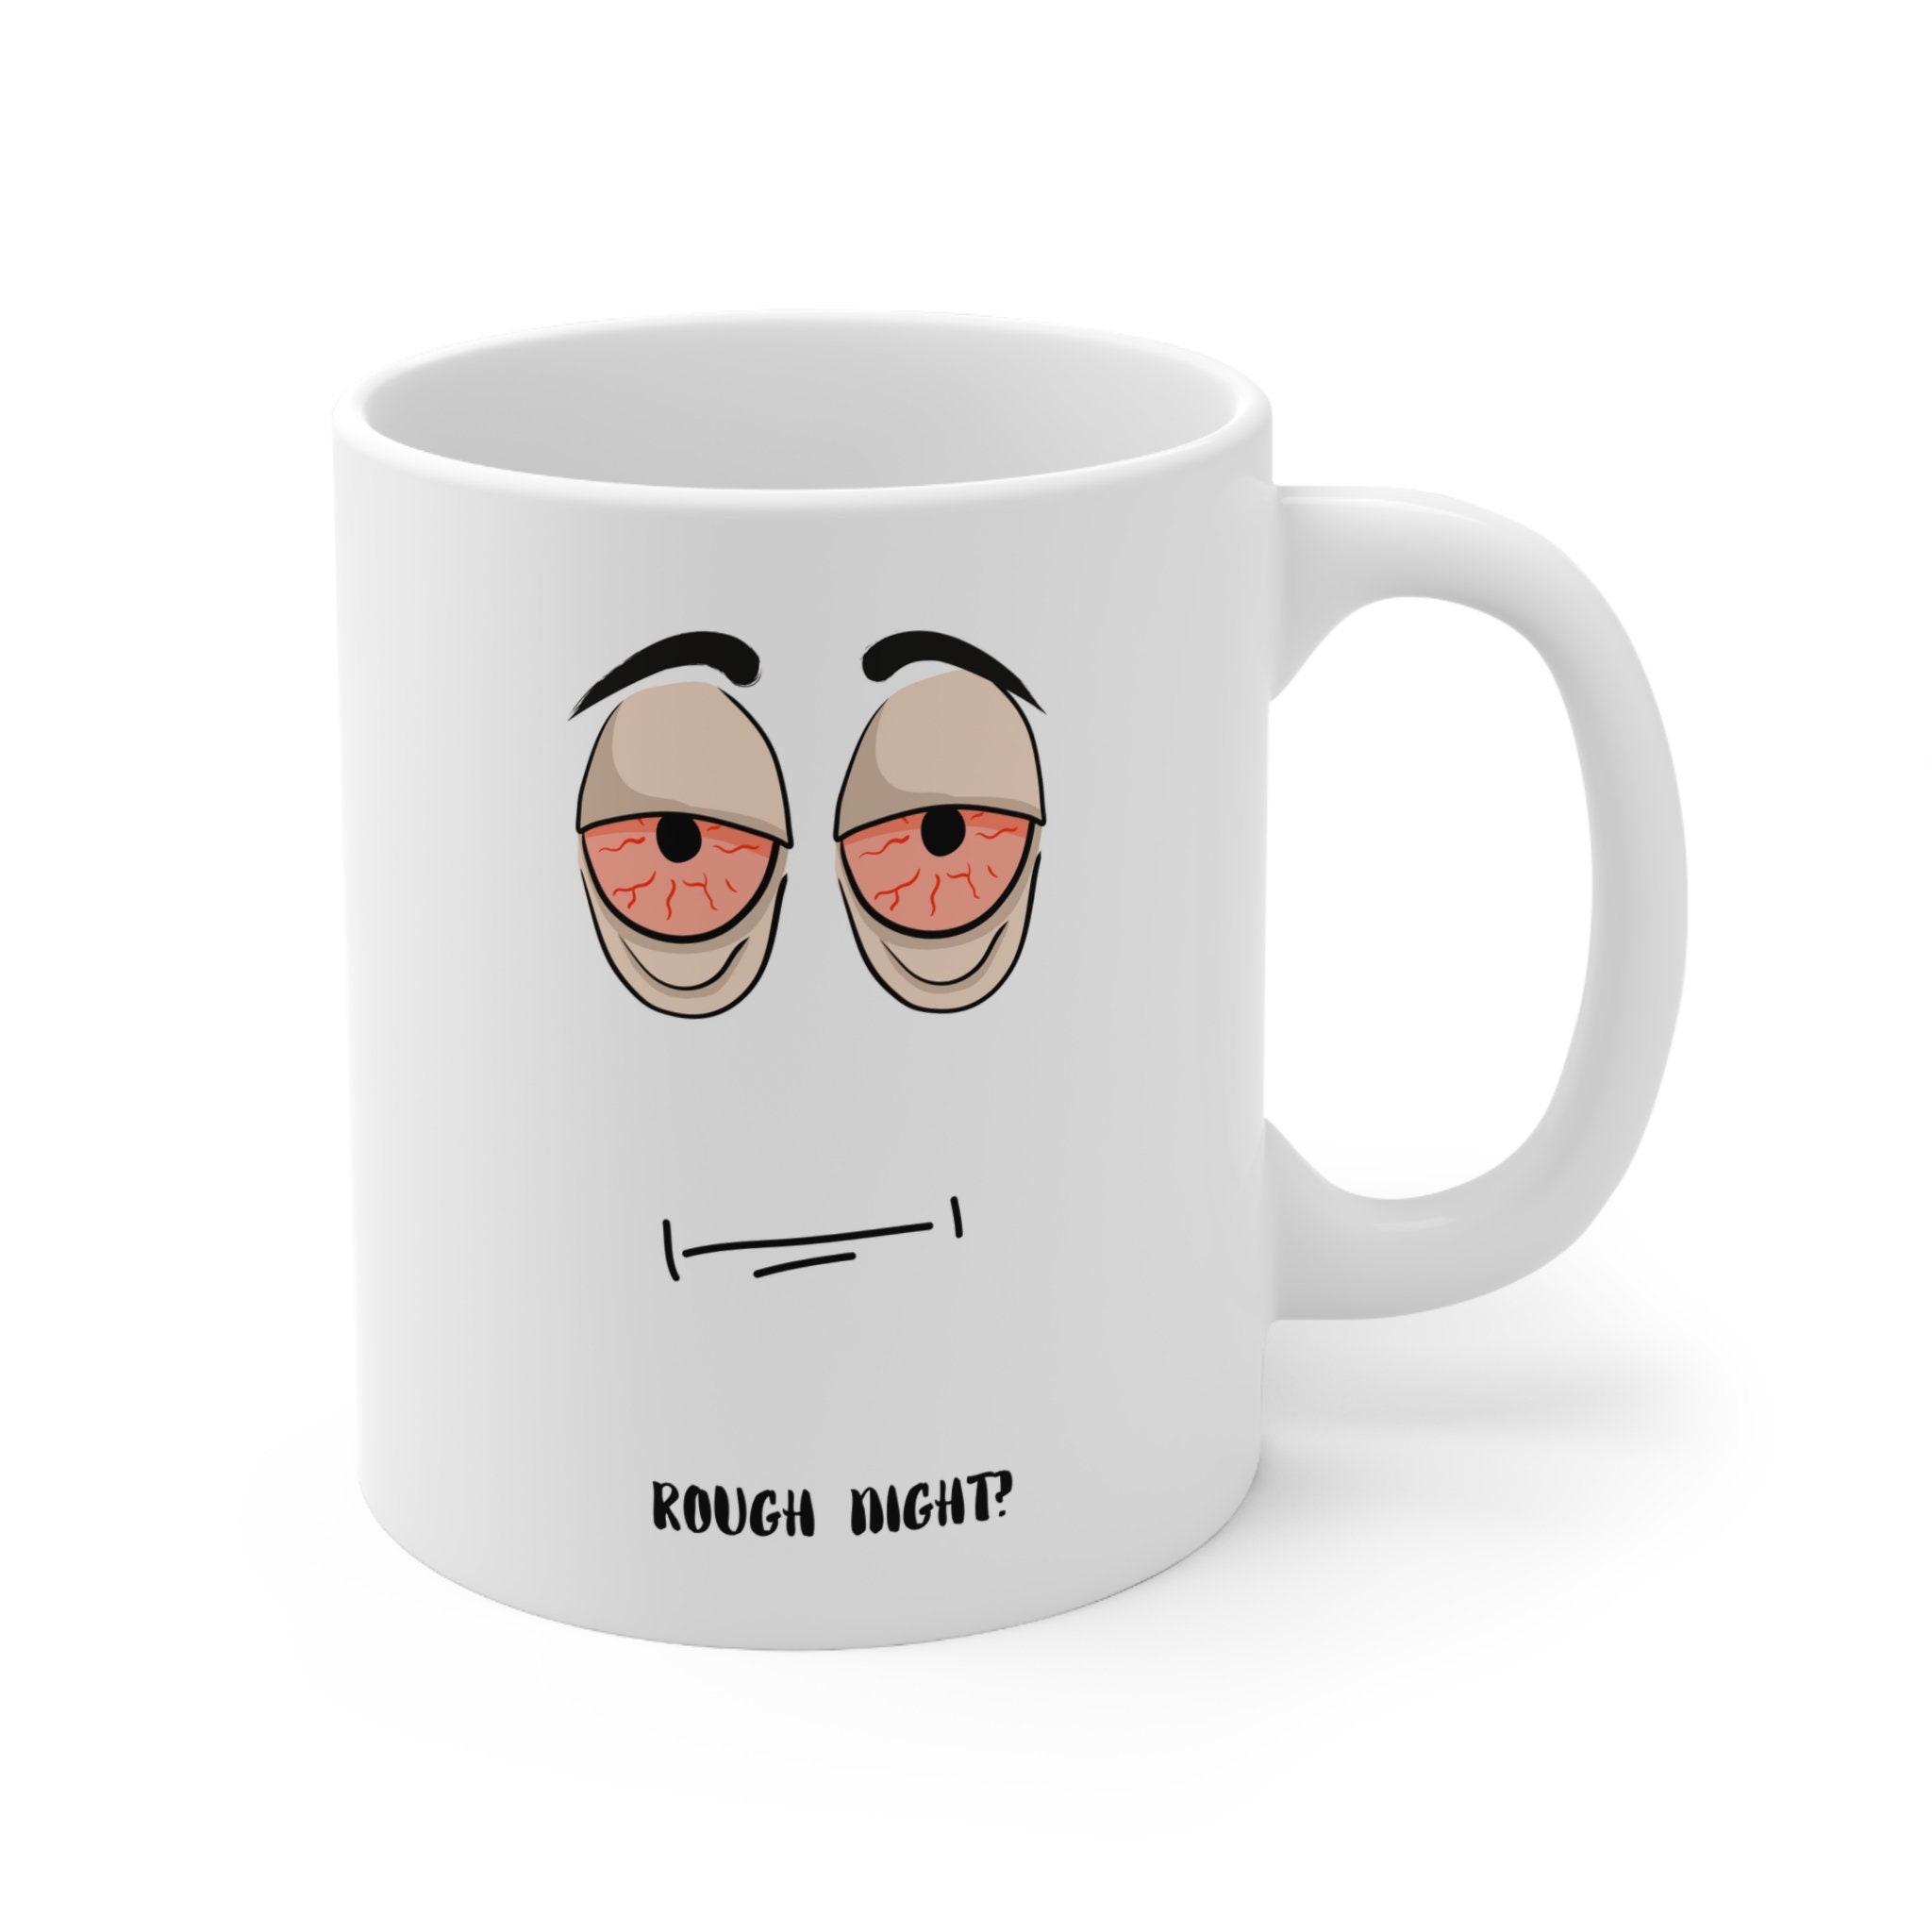 Skitongifts Funny Ceramic Novelty Coffee Mug Funny I'm A Magistrate My